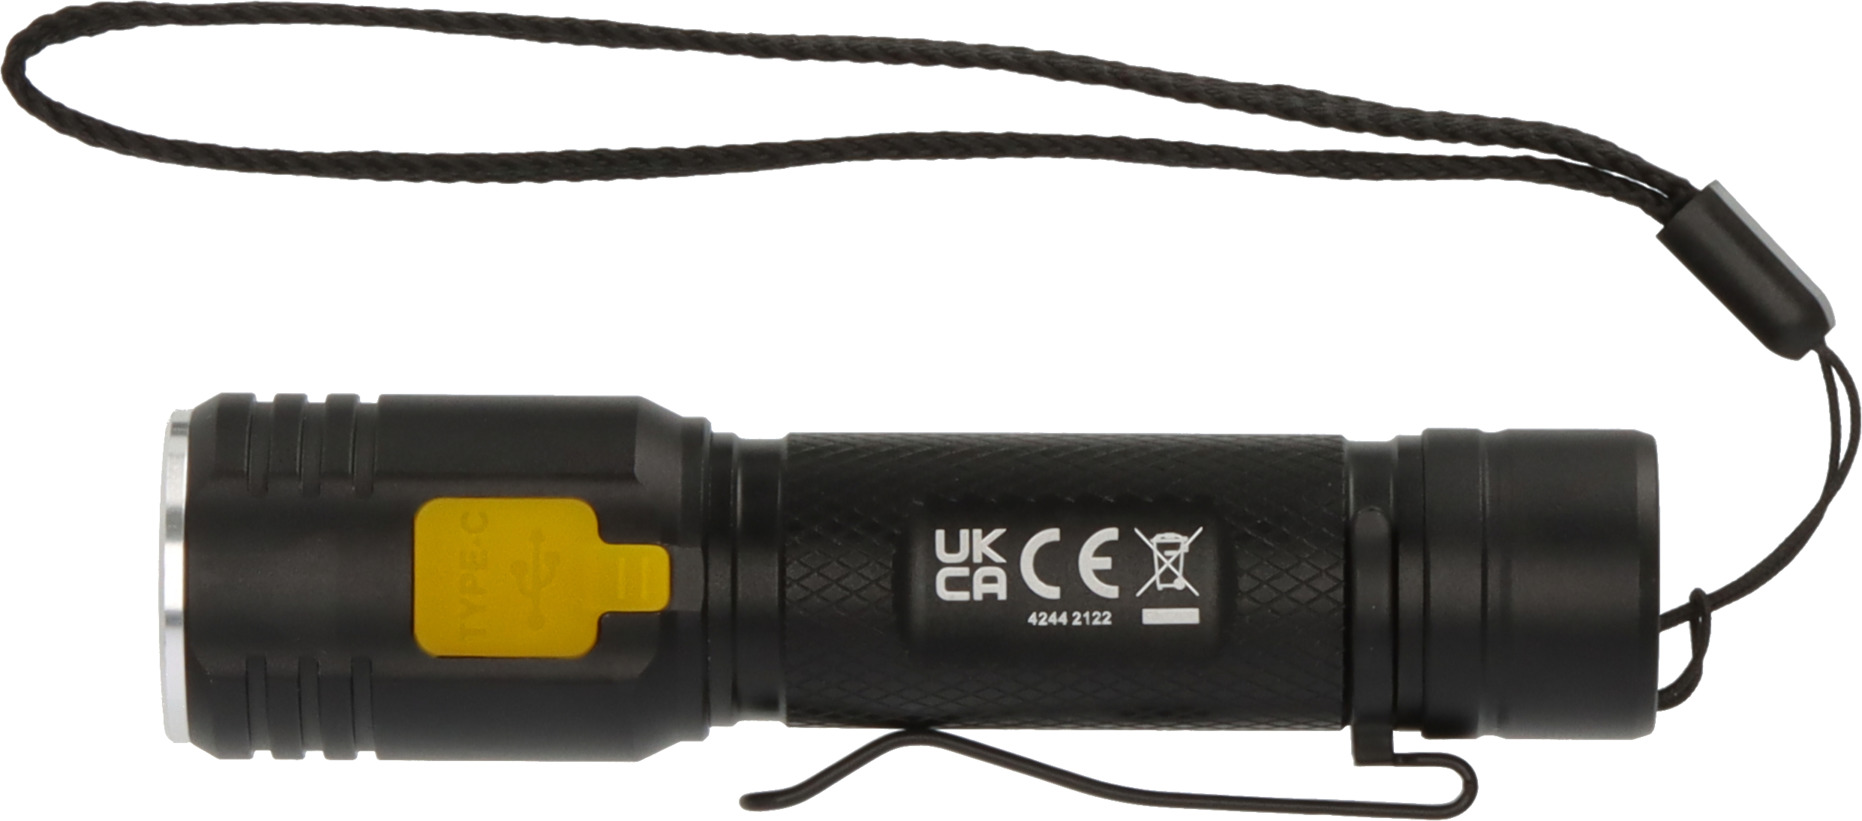 Lampe torche LED - rechargeable - Lux Premium Selector TL350AFS  BRENNENSTUHL